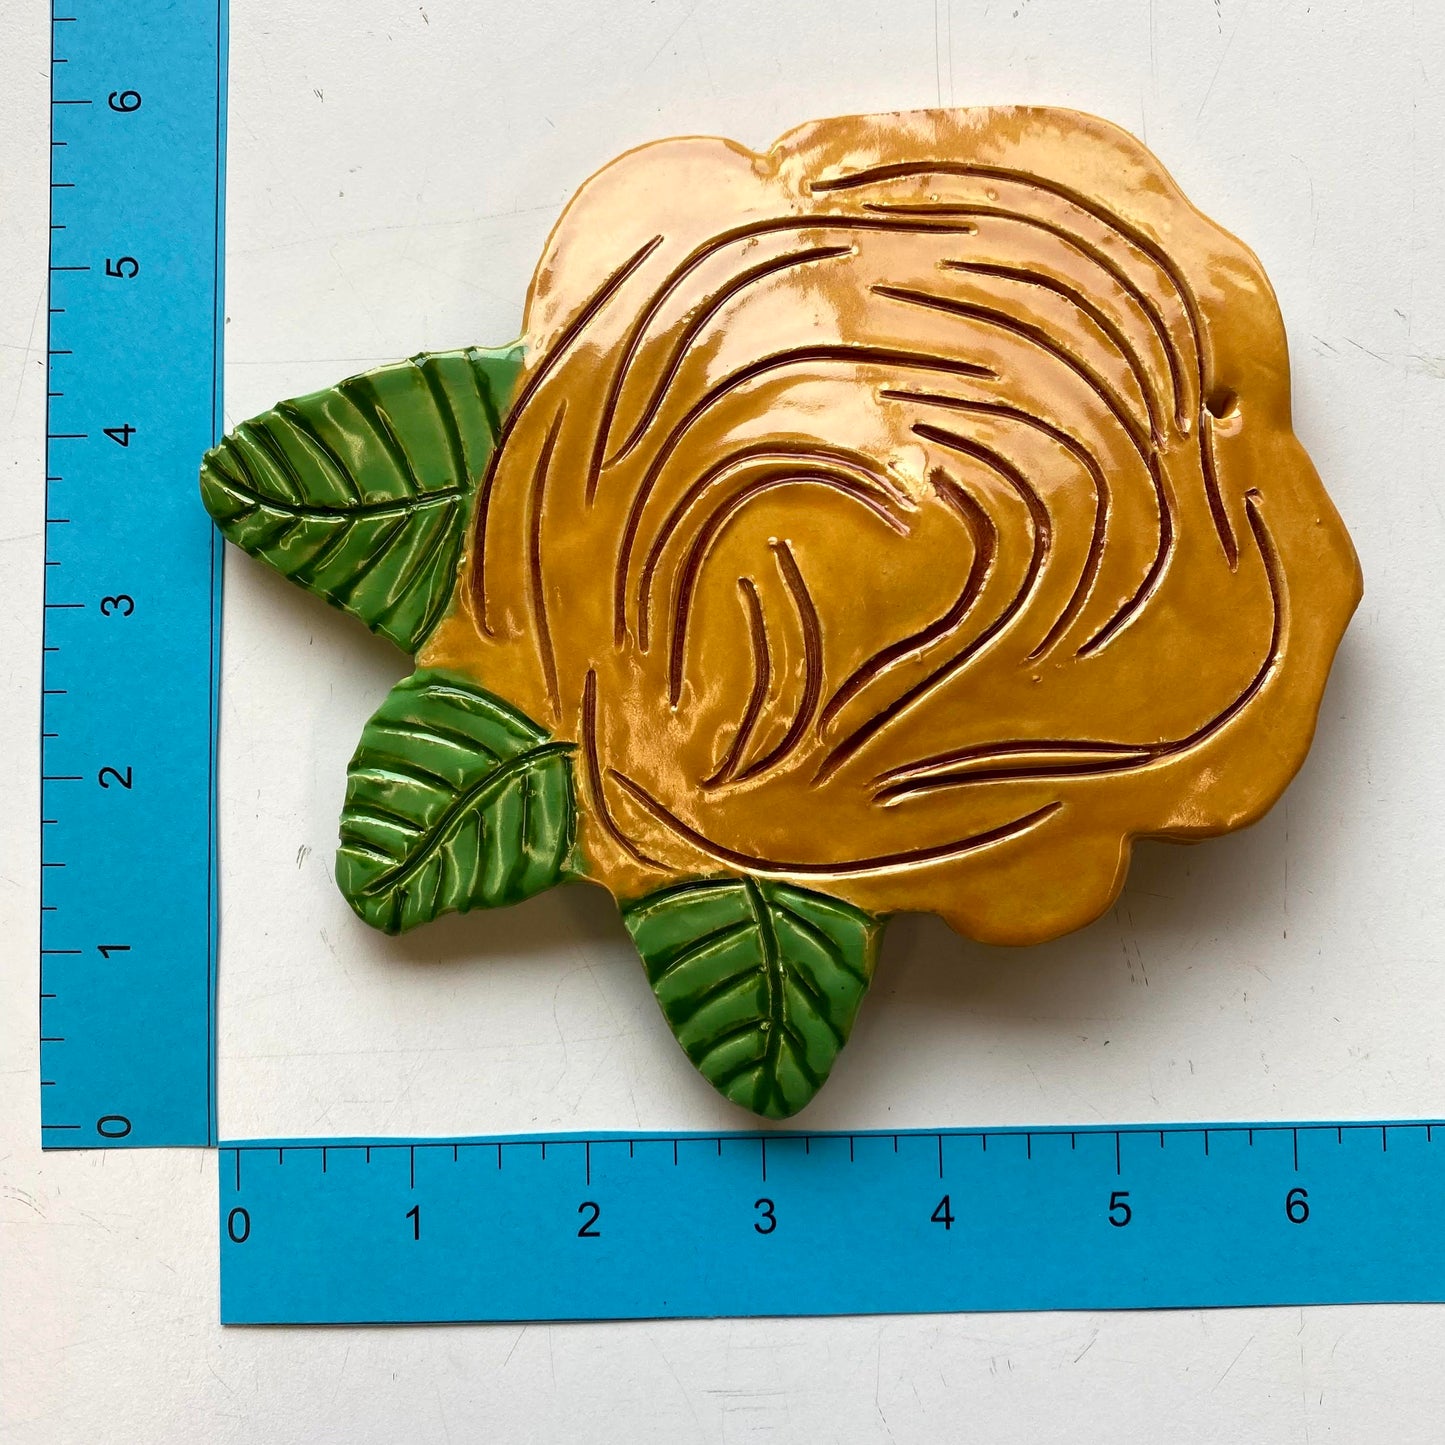 WATCH Resources Art Guild - Ceramic Arts Handmade Clay Crafts 5-inch x 6-inch Glazed Flower Rose by Eileen Shumate